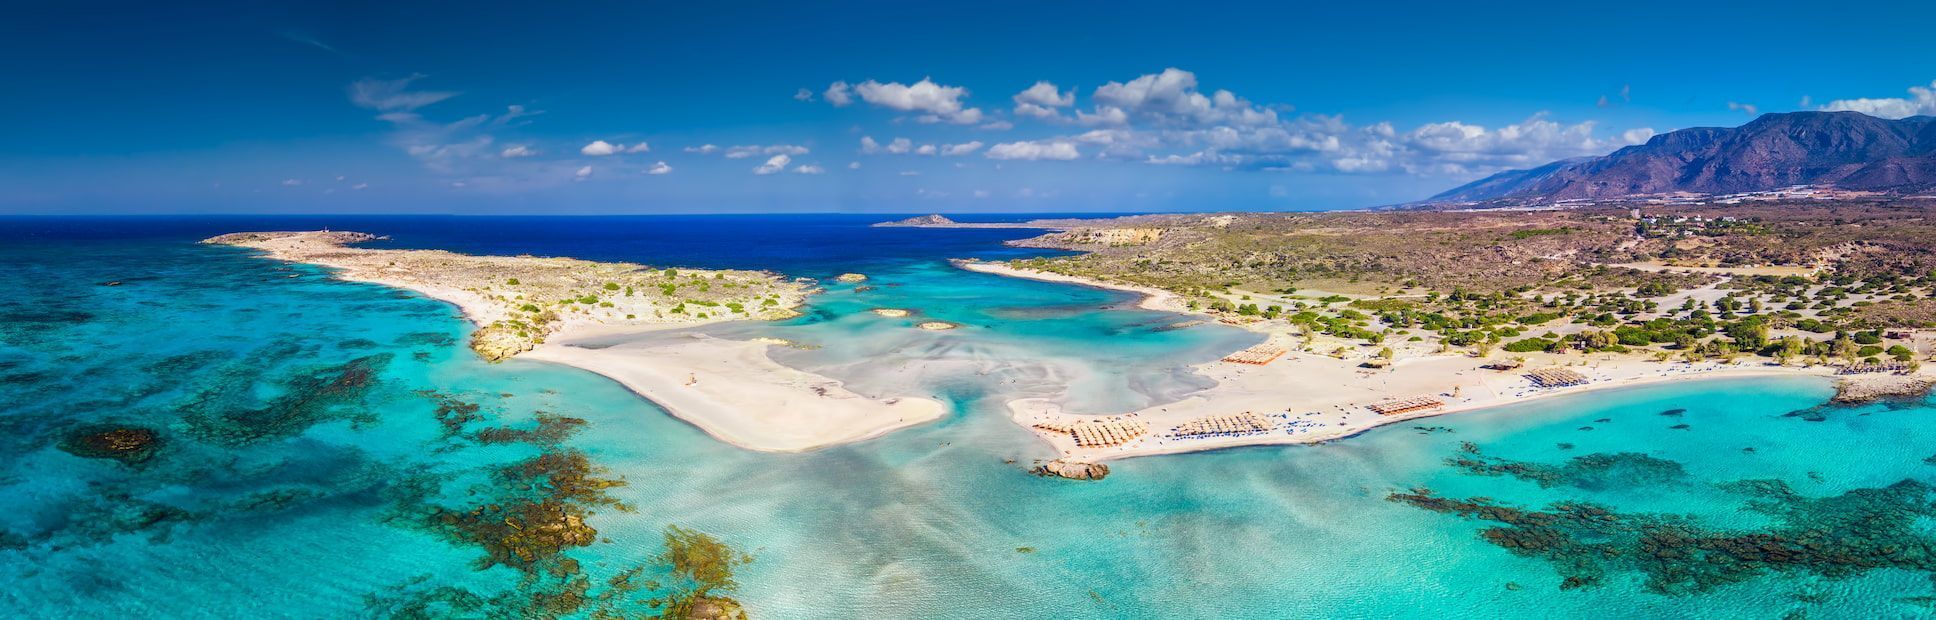 Panorama di una spiaggia a Creta - WeRoad